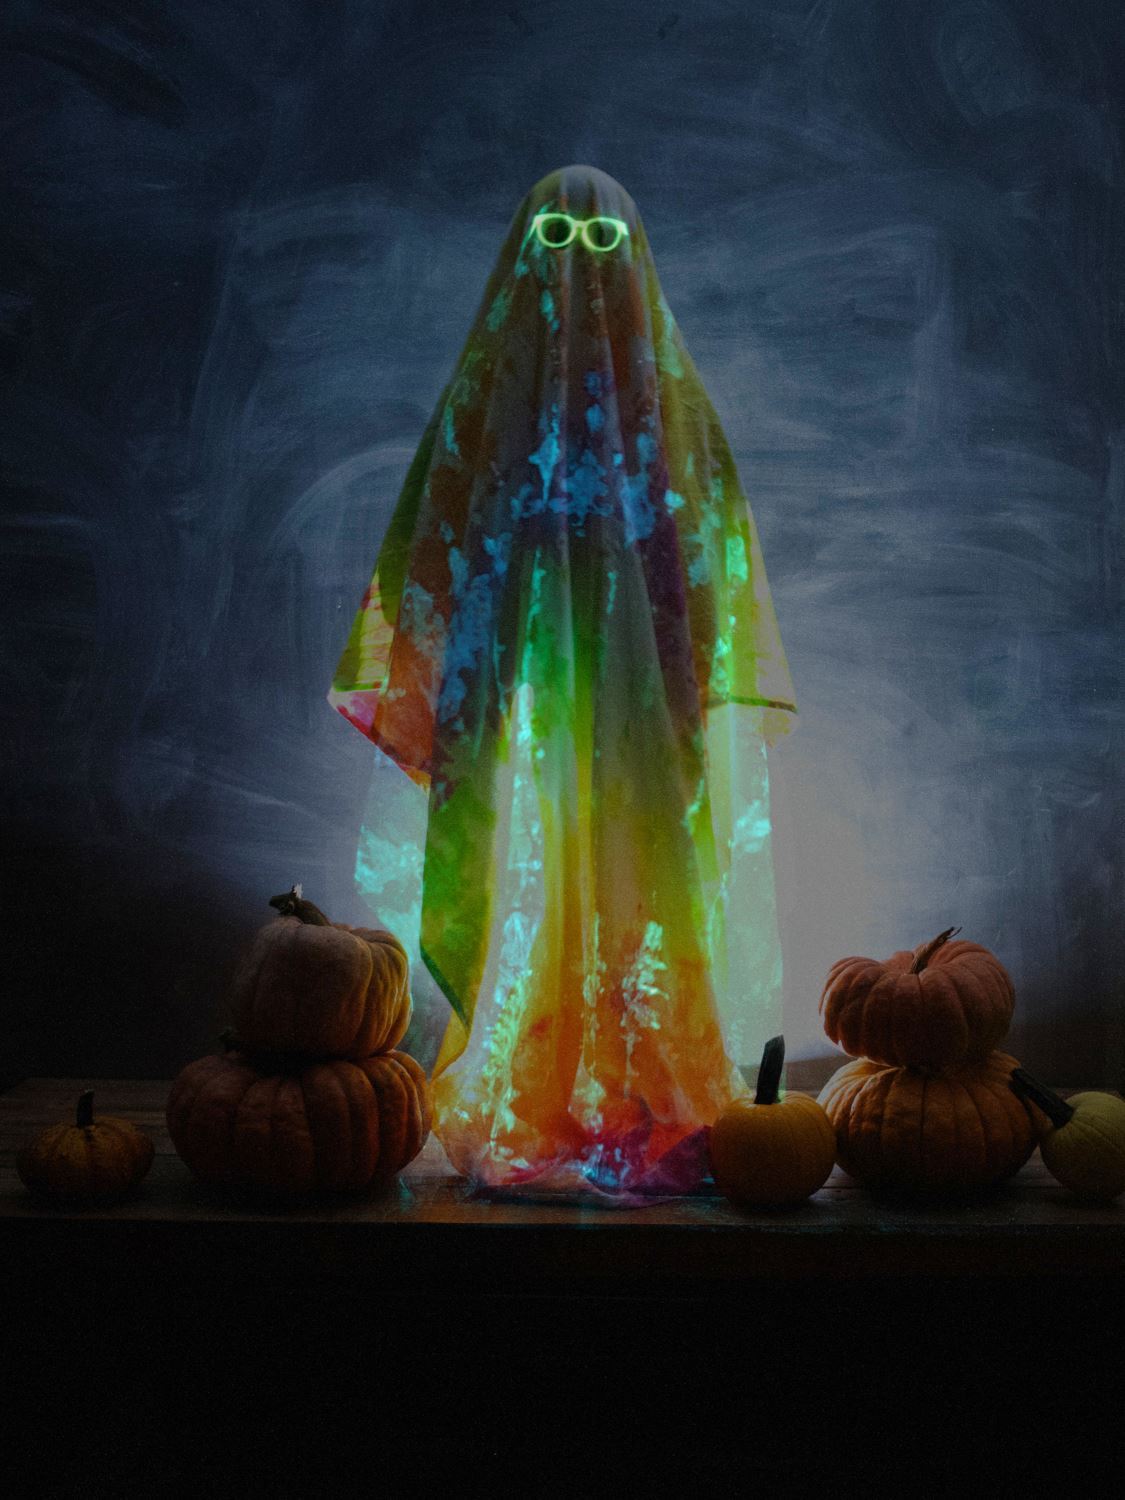 Glow in the Dark Halloween Ghost Costume